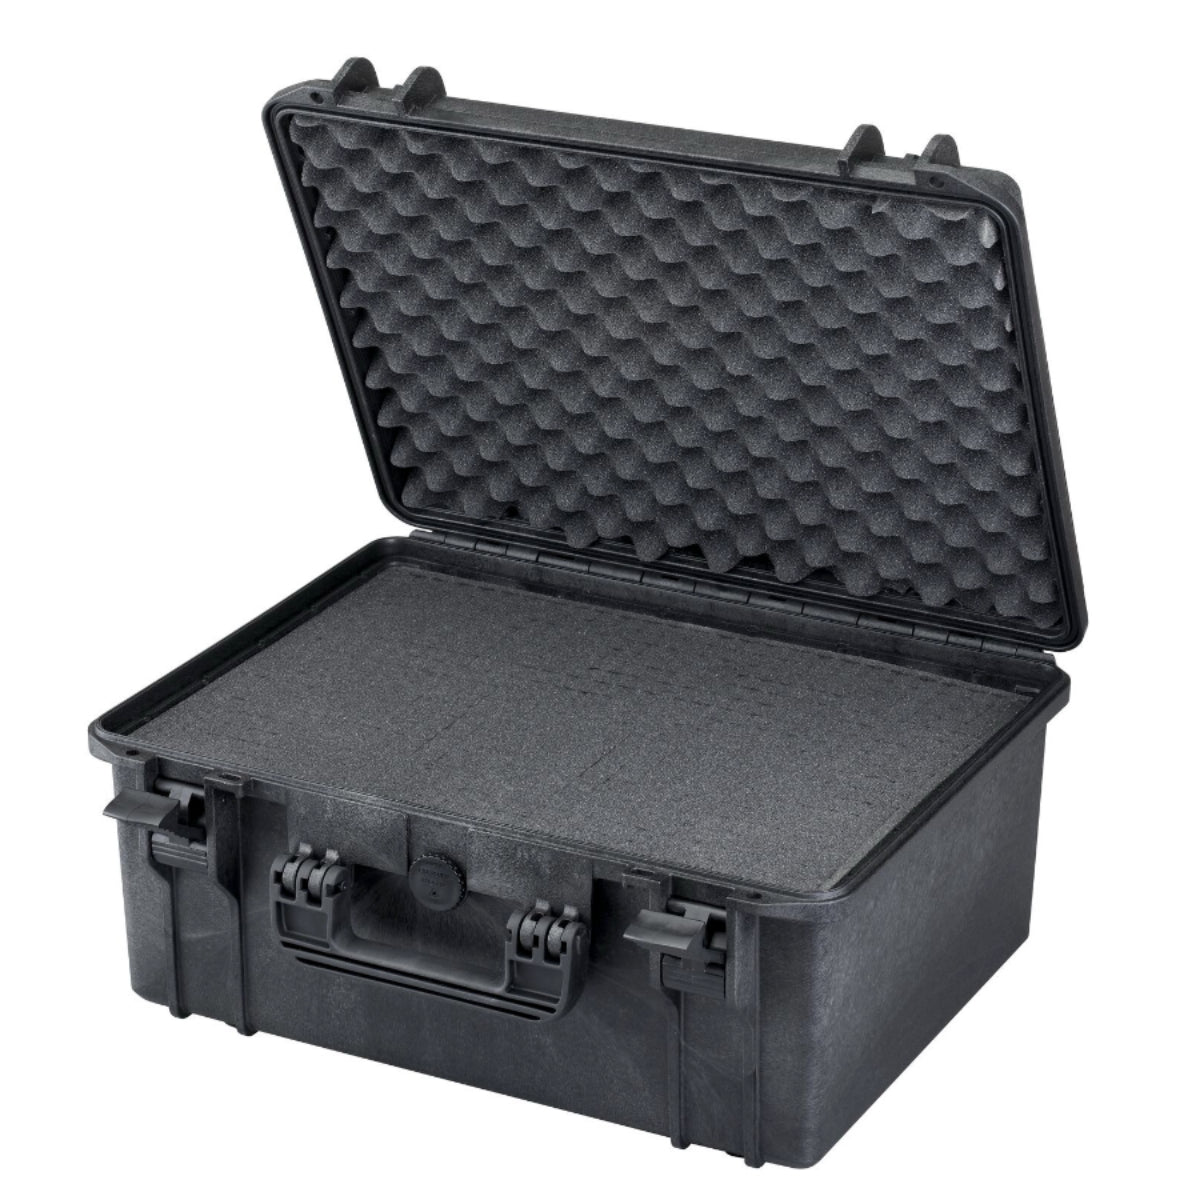 SP PRO 465H220S Black Carry Case, Cubed Foam, ID: L465xW335xH220mm